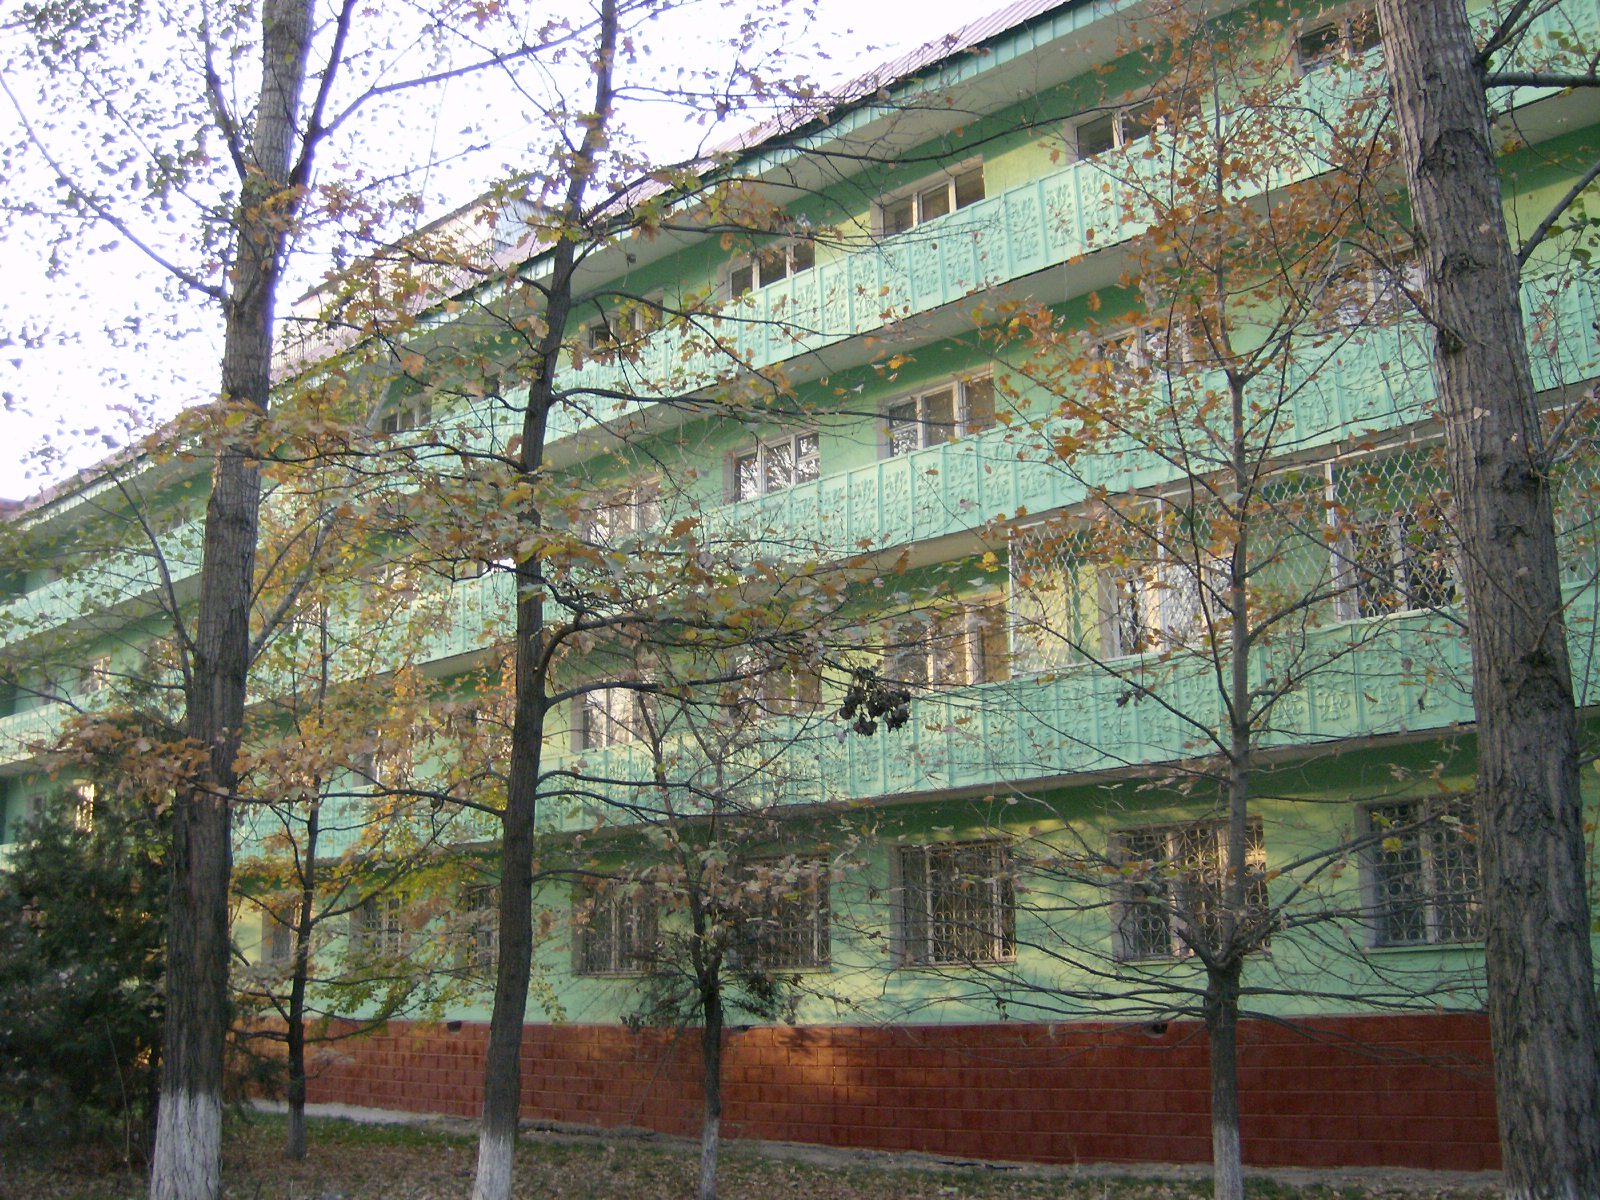 A block of Soviet era flats